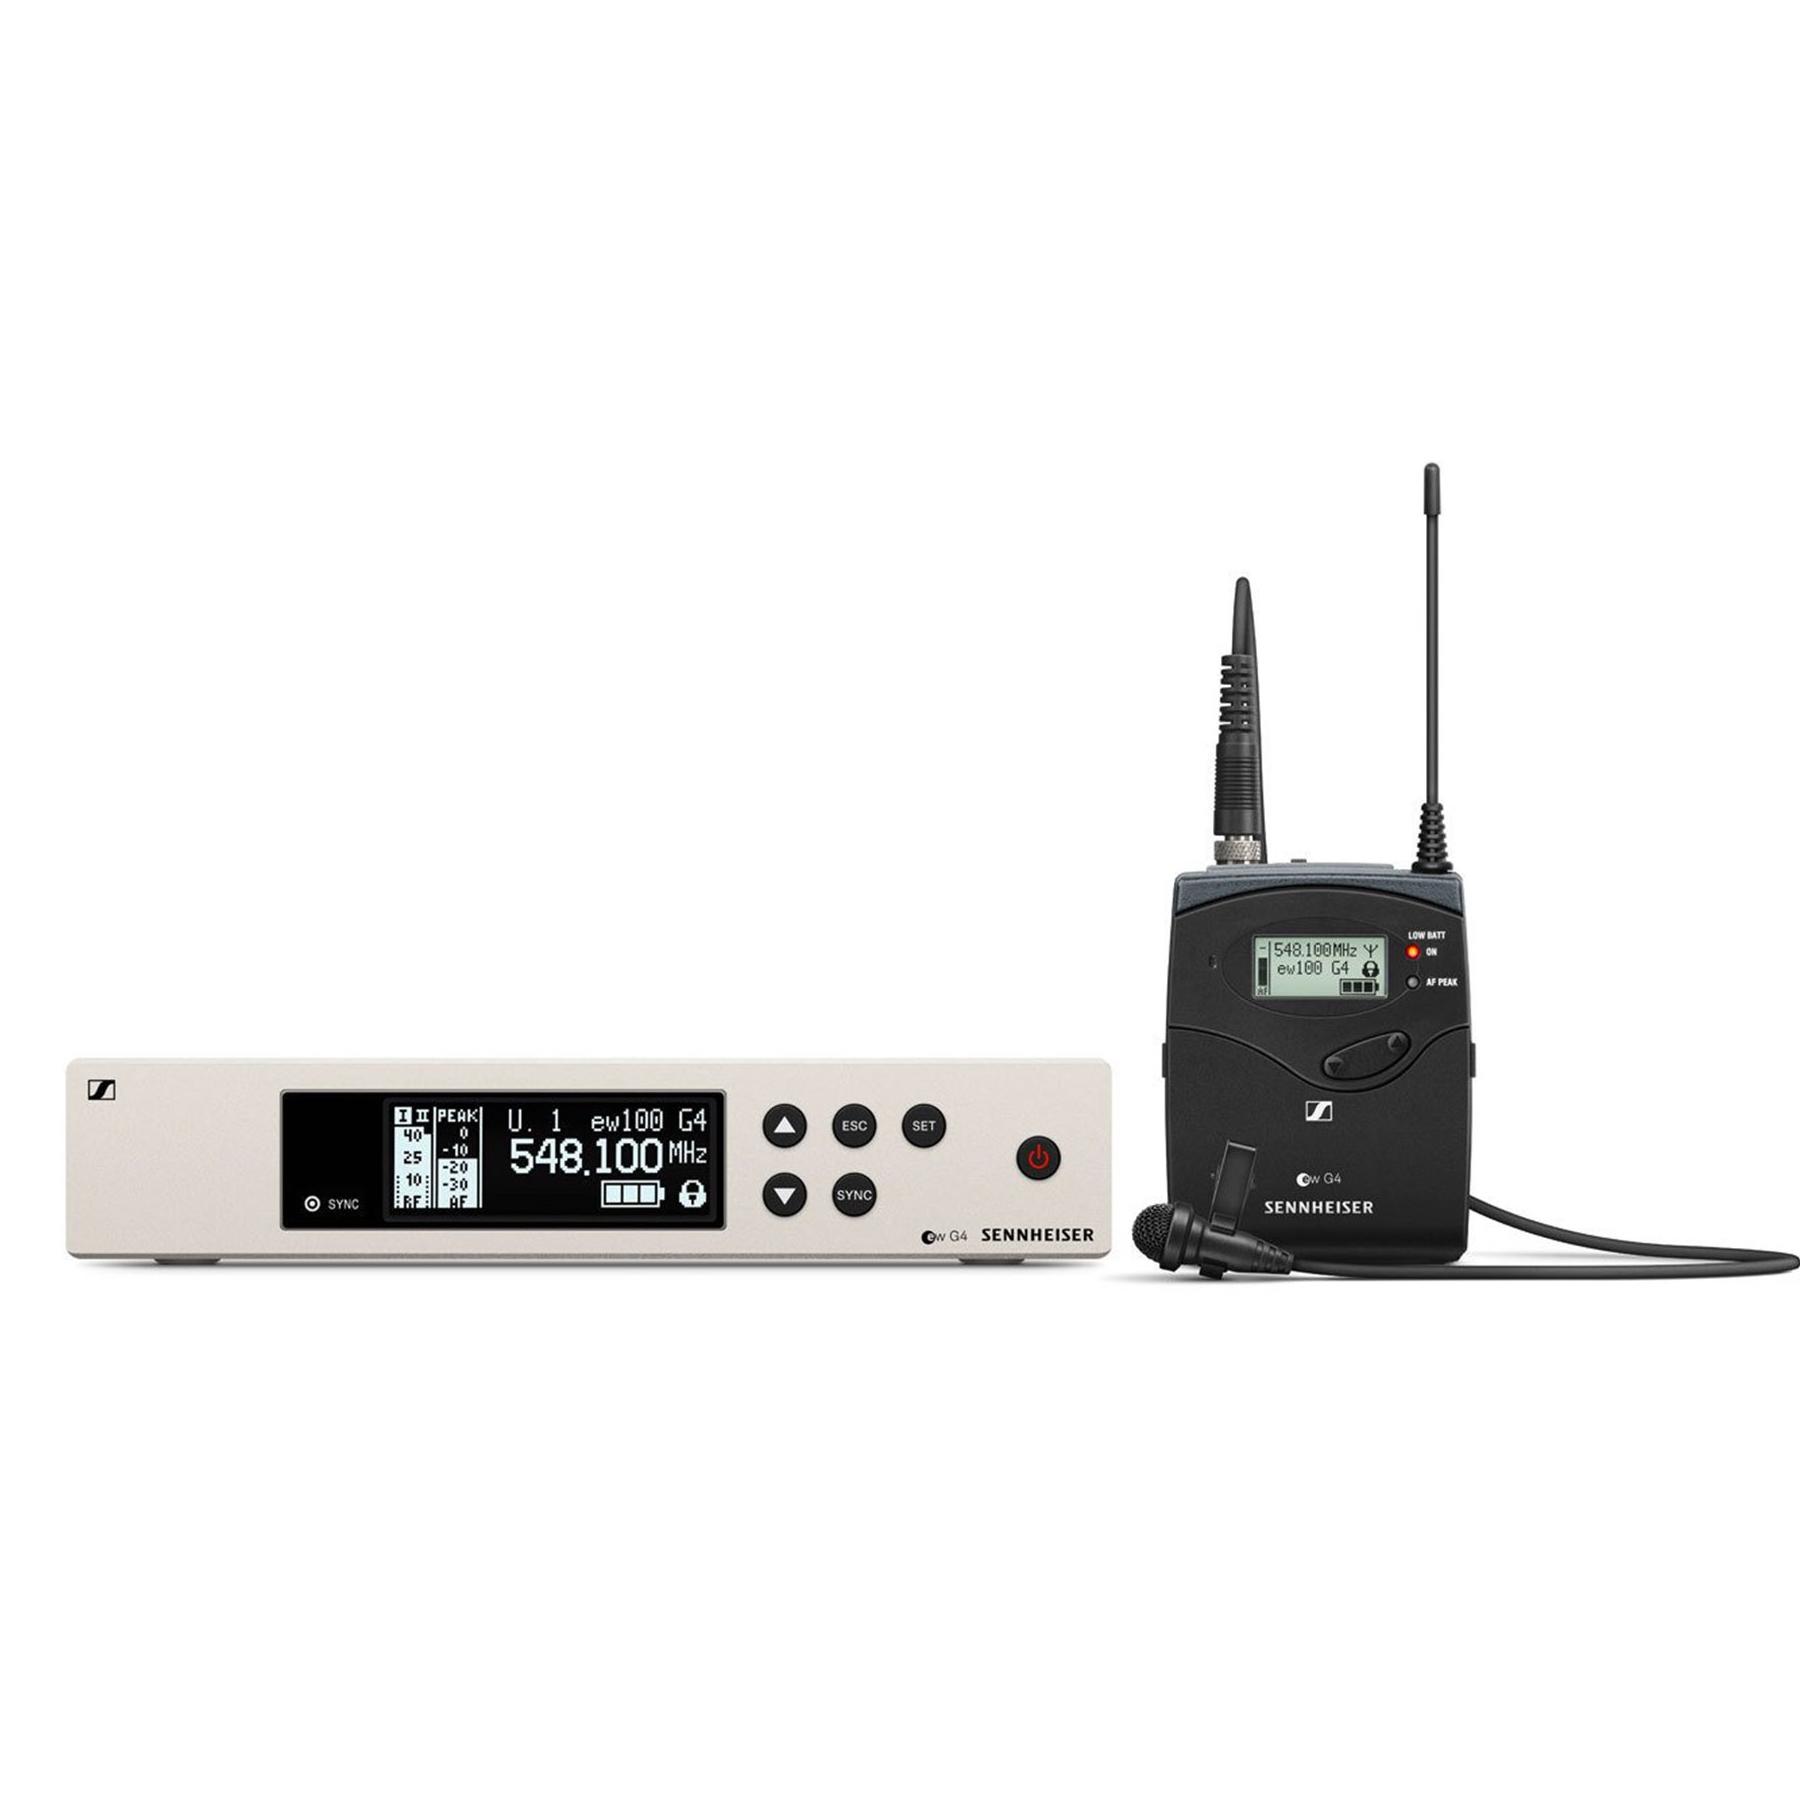 Sennheiser ew 100 G4-ME2 GB Professional Lapel Radio Mic System